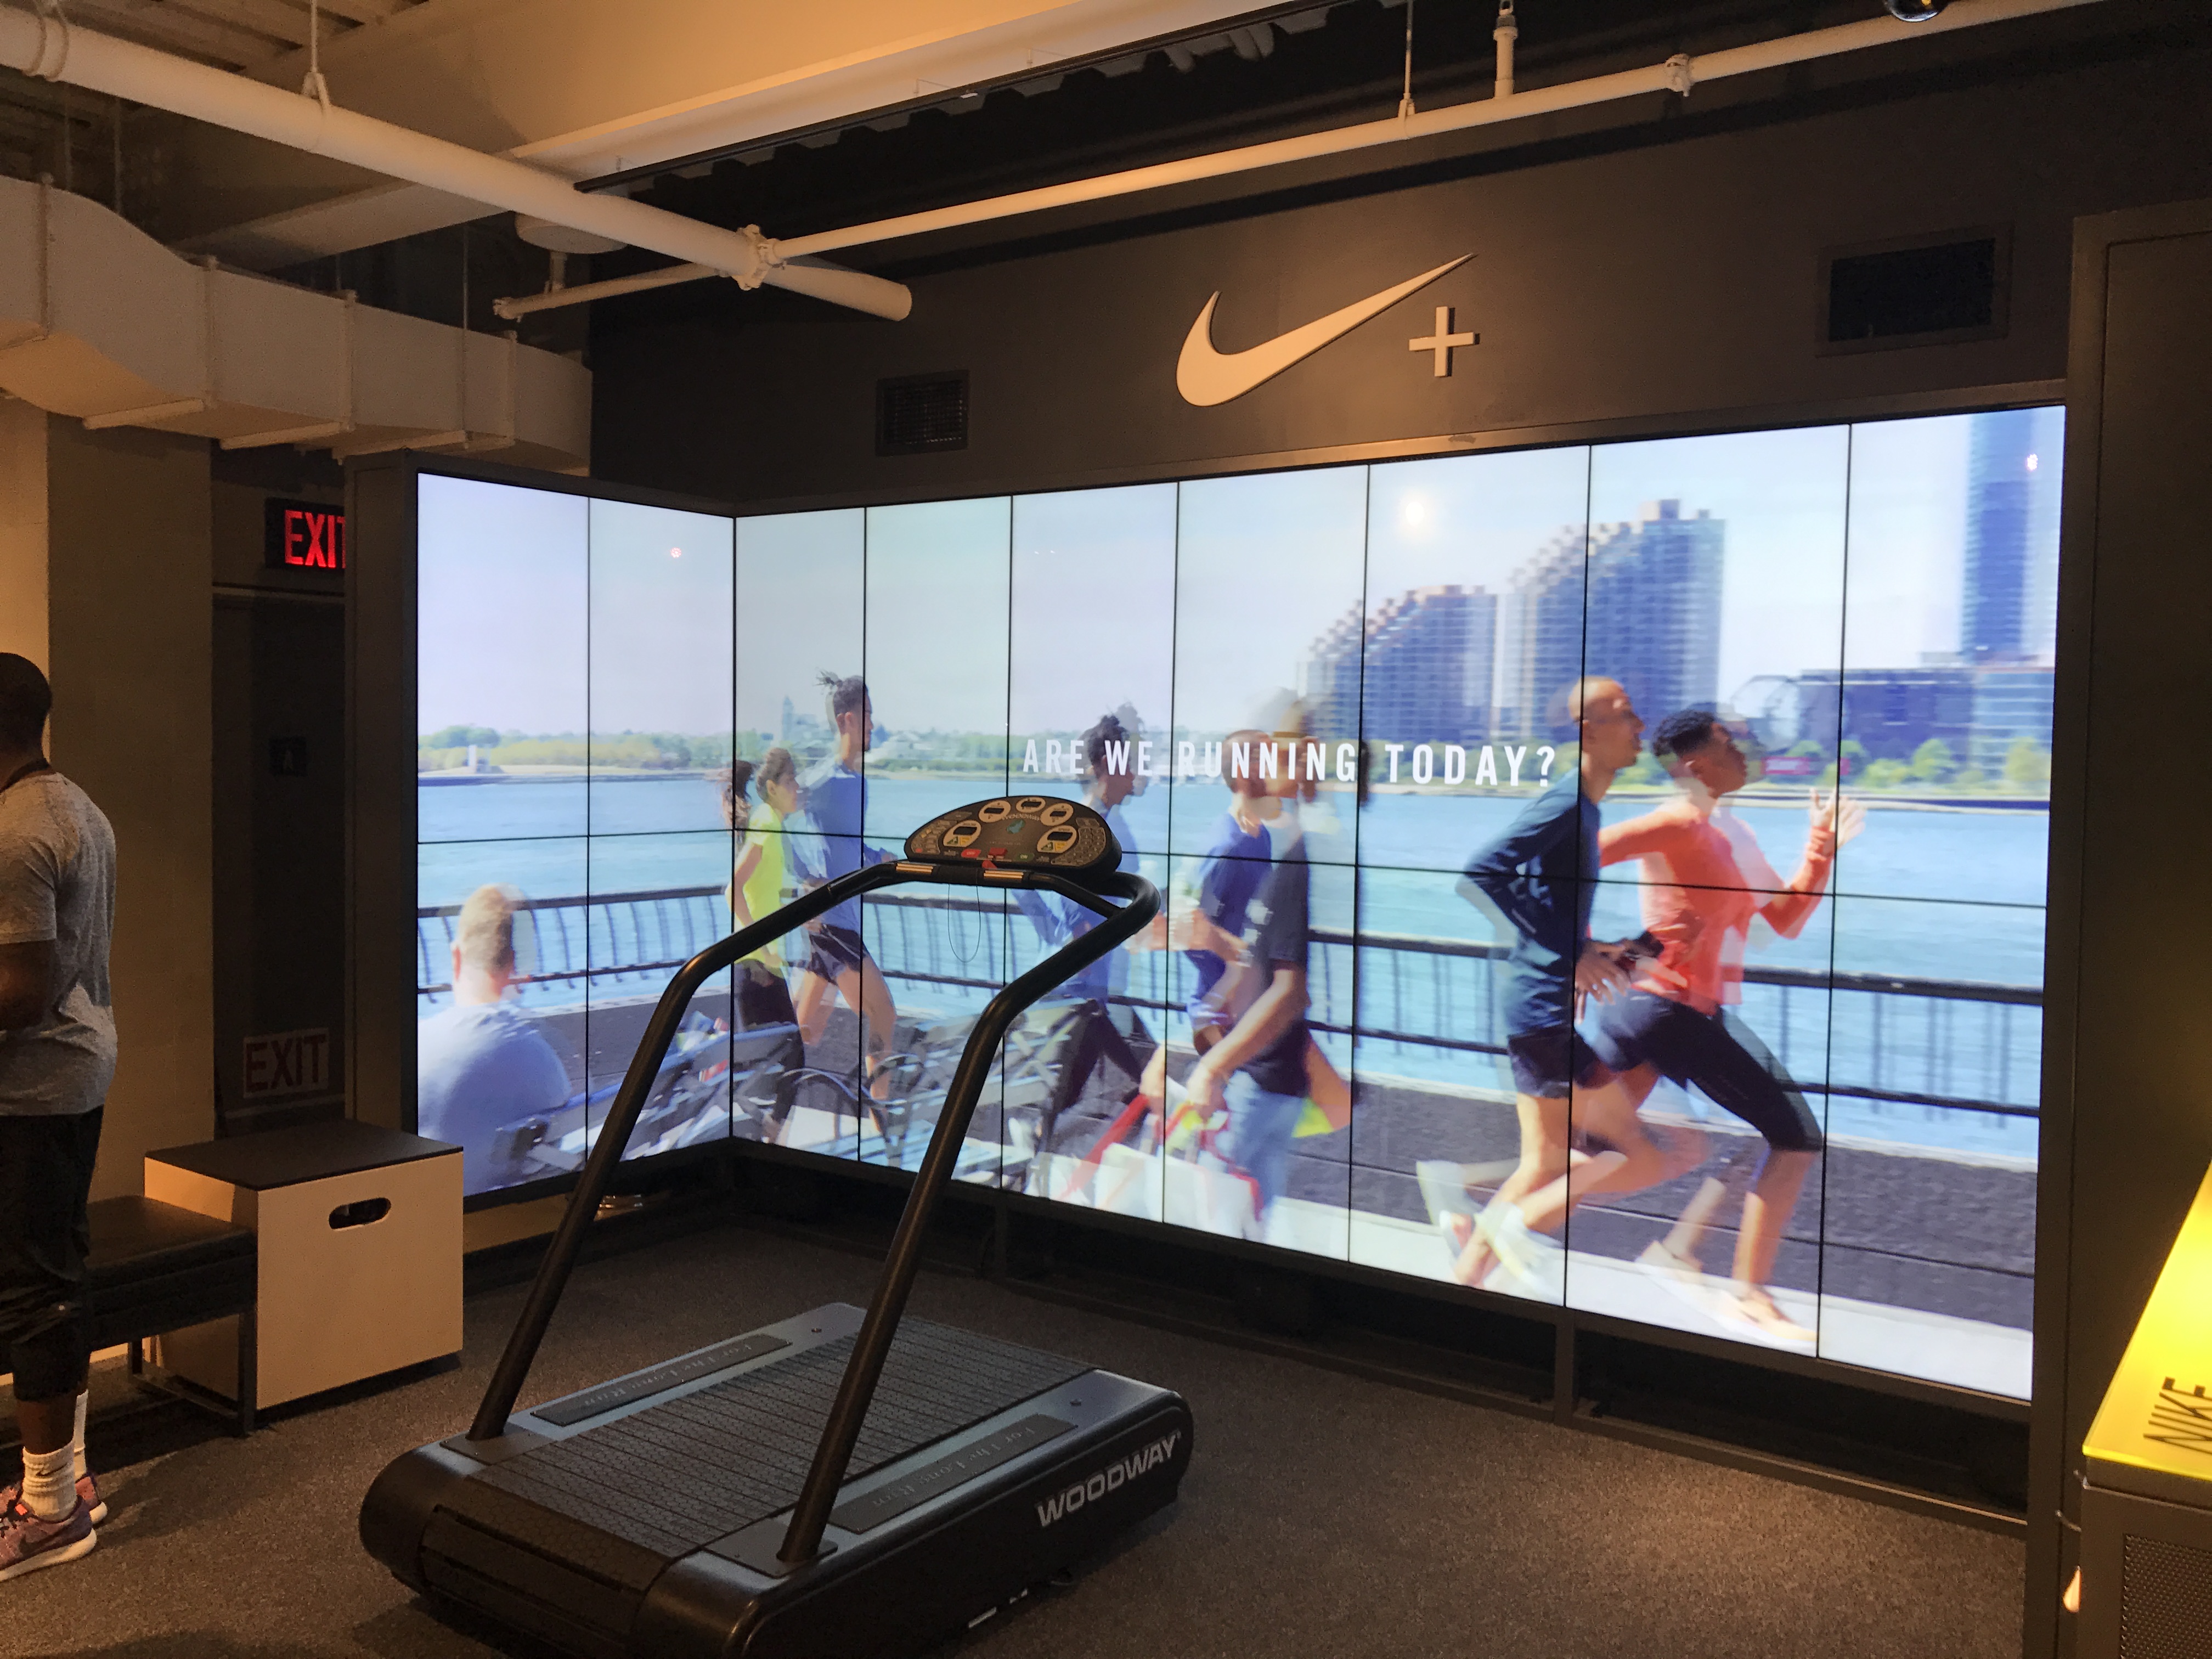 Nike SoHo Digital Retail Experience - Silver Winner - NOW Design